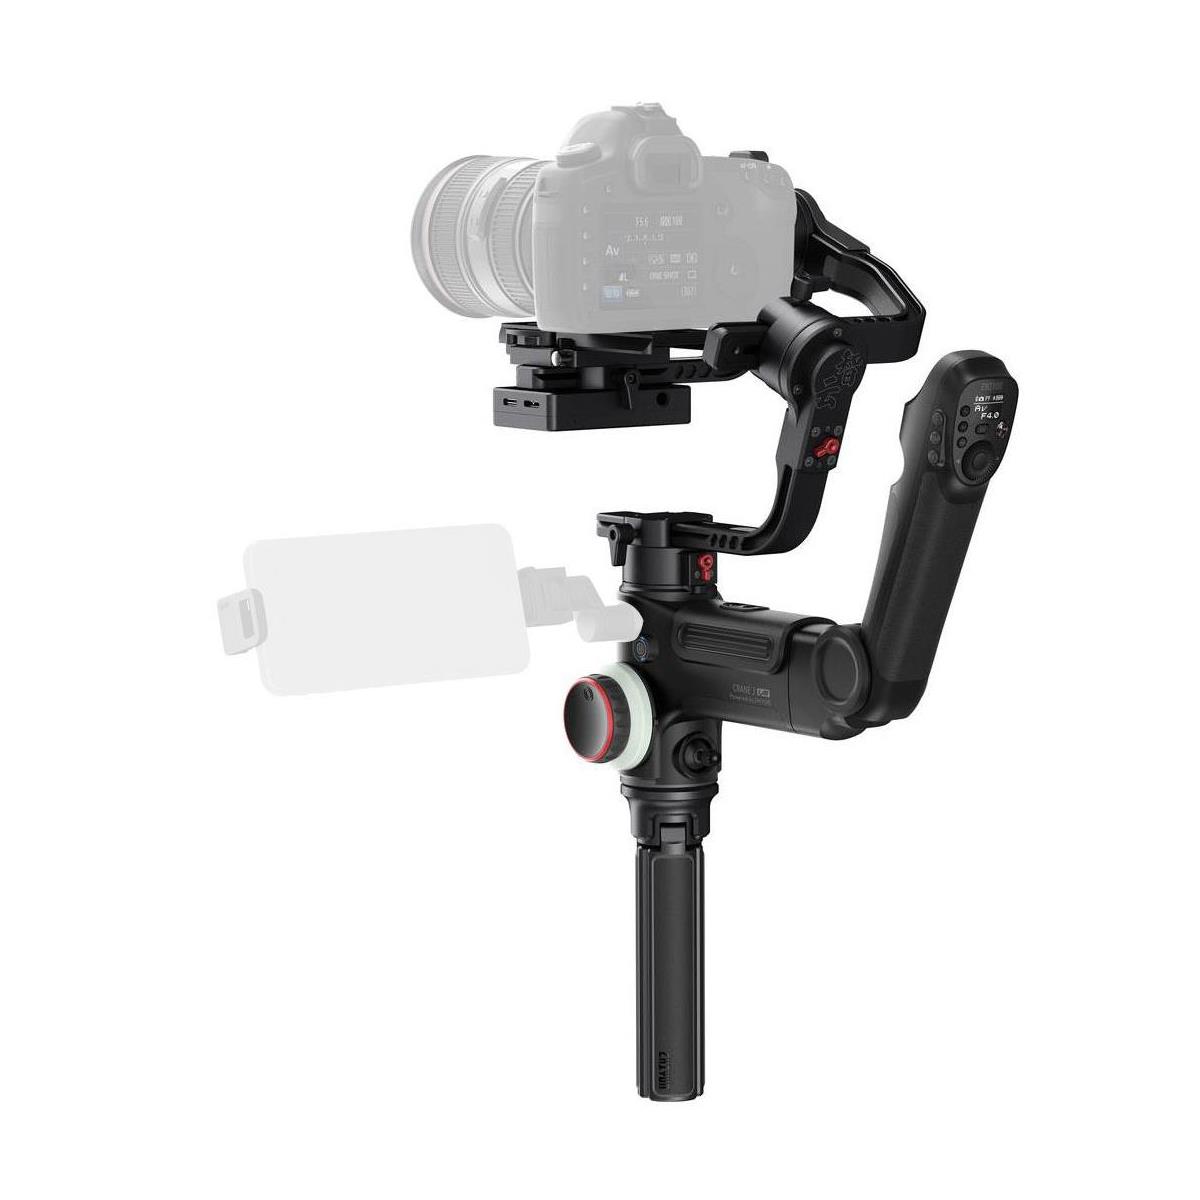 

Zhiyun CRANE 3 LAB 3-Axis Handheld Gimbal Stabilizer for DSLR Camera